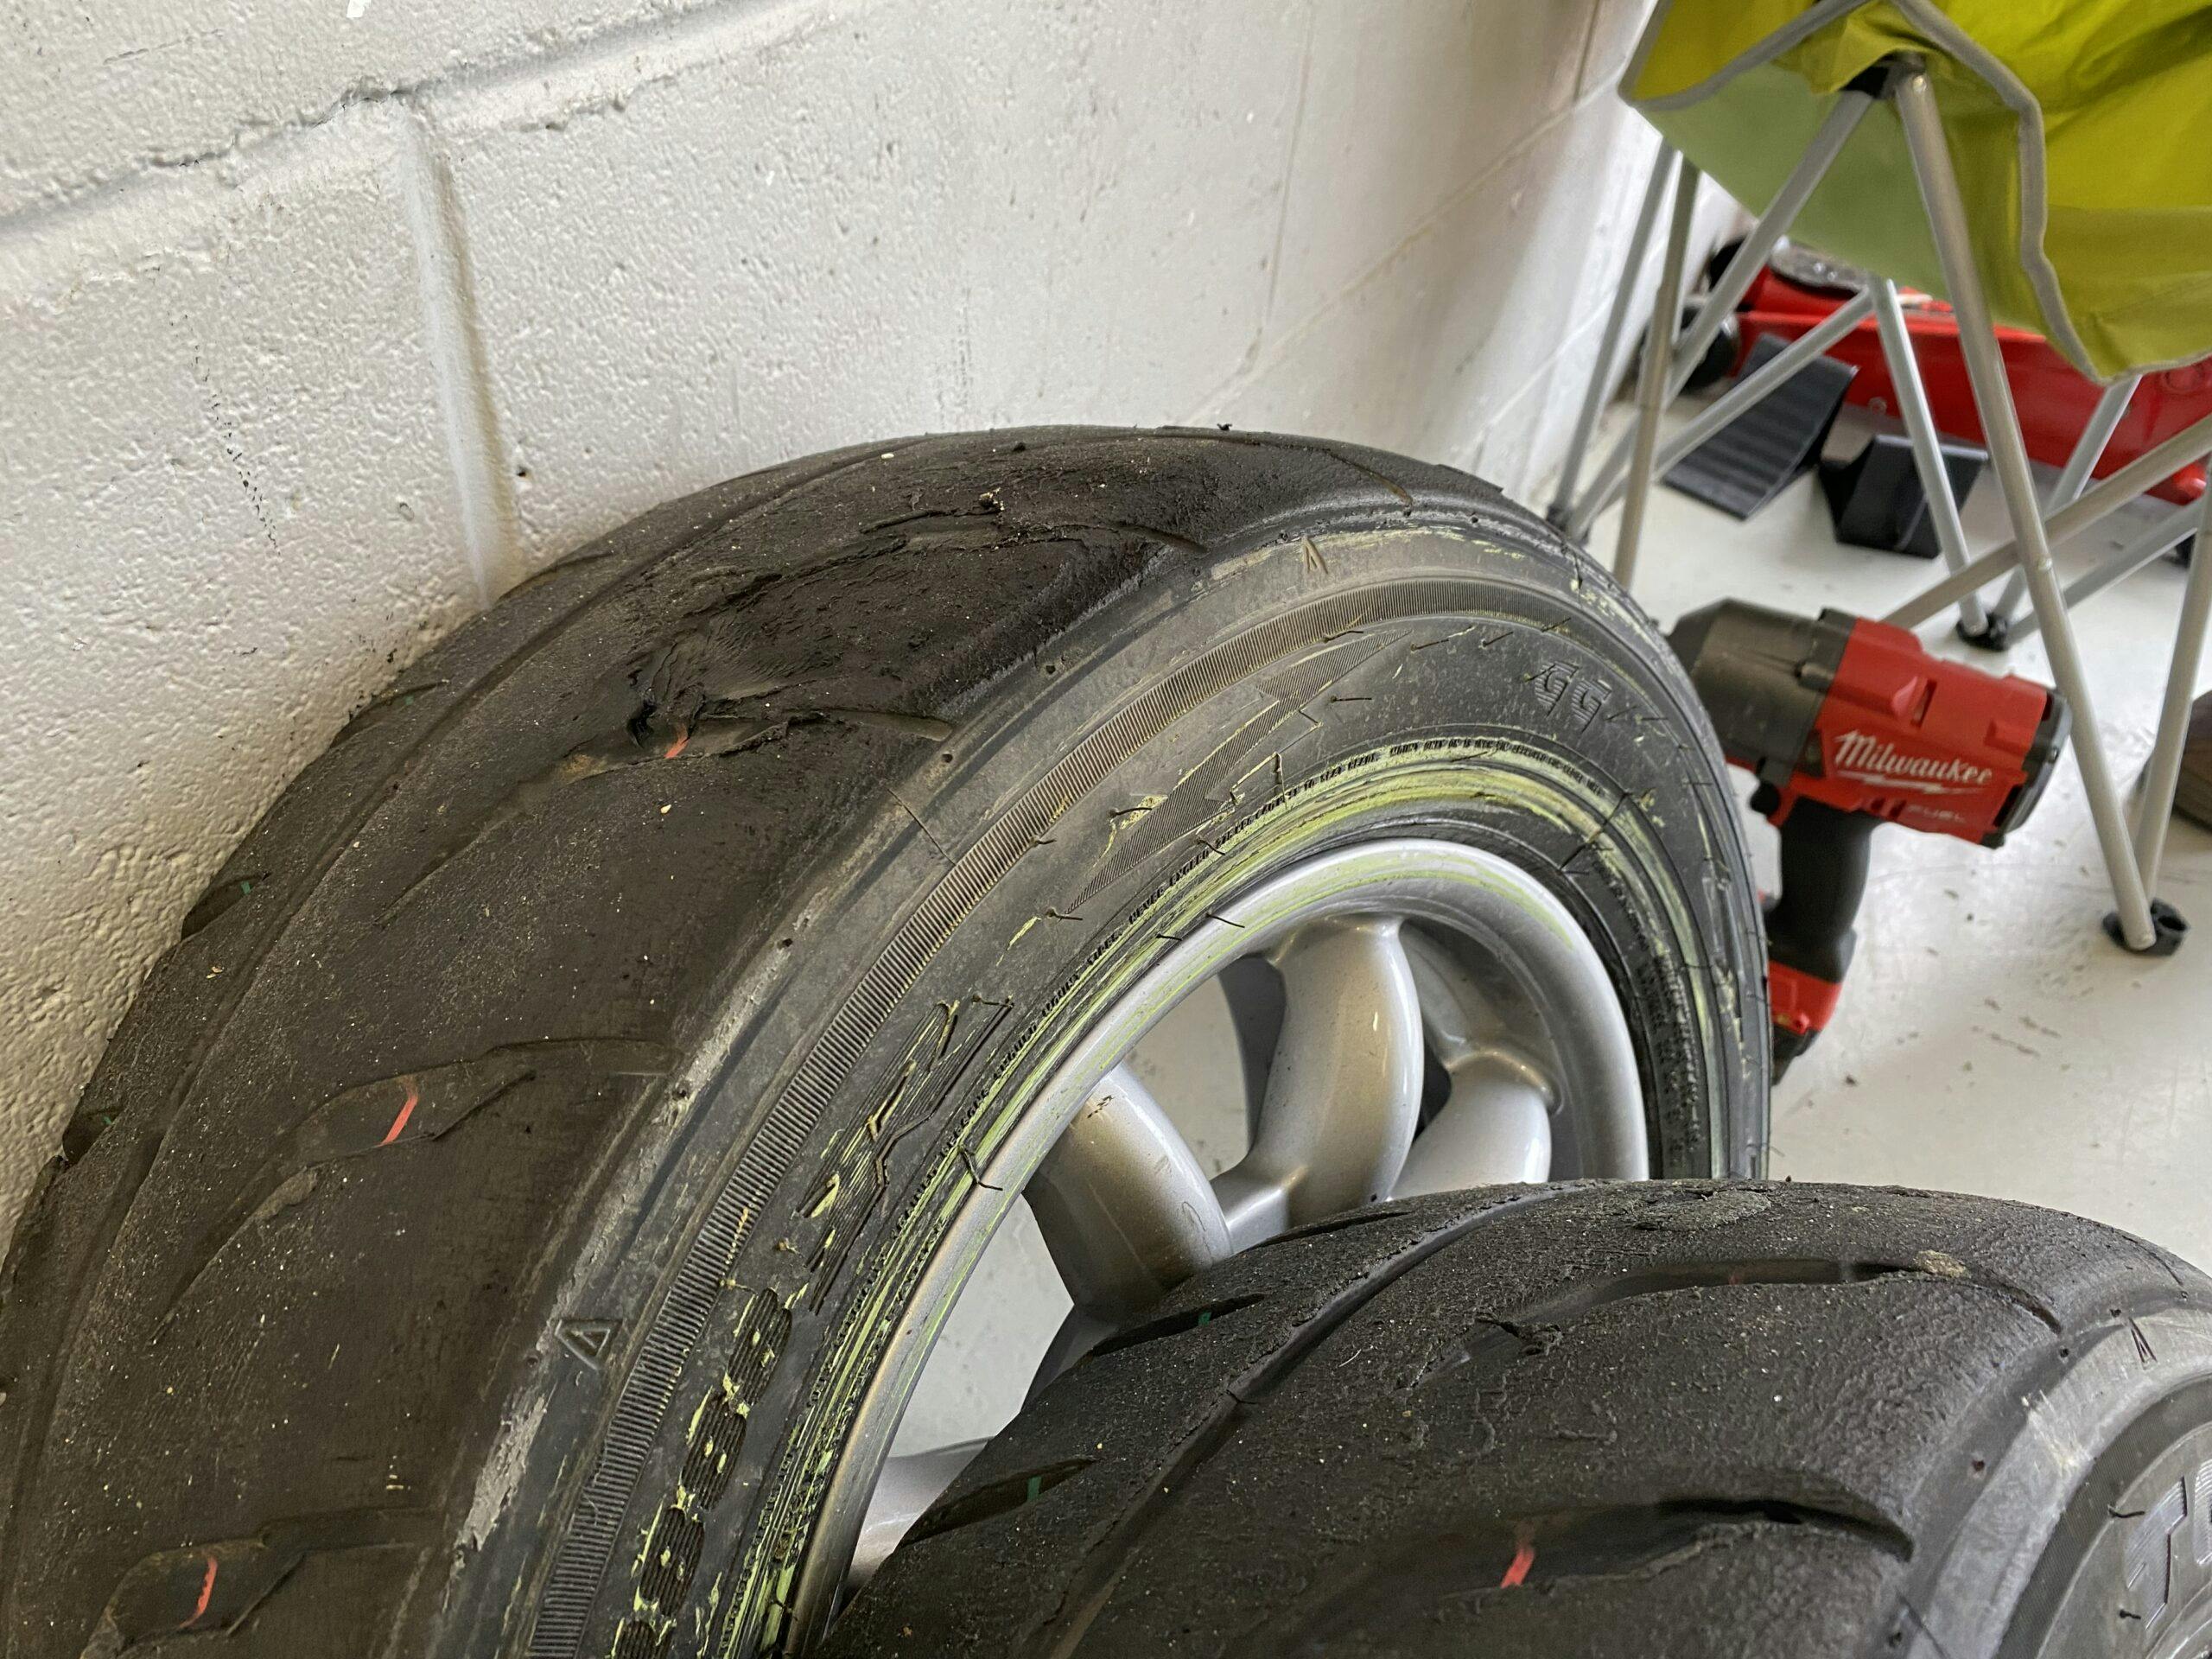 EnduroKA damage 2 crash flat spot tire